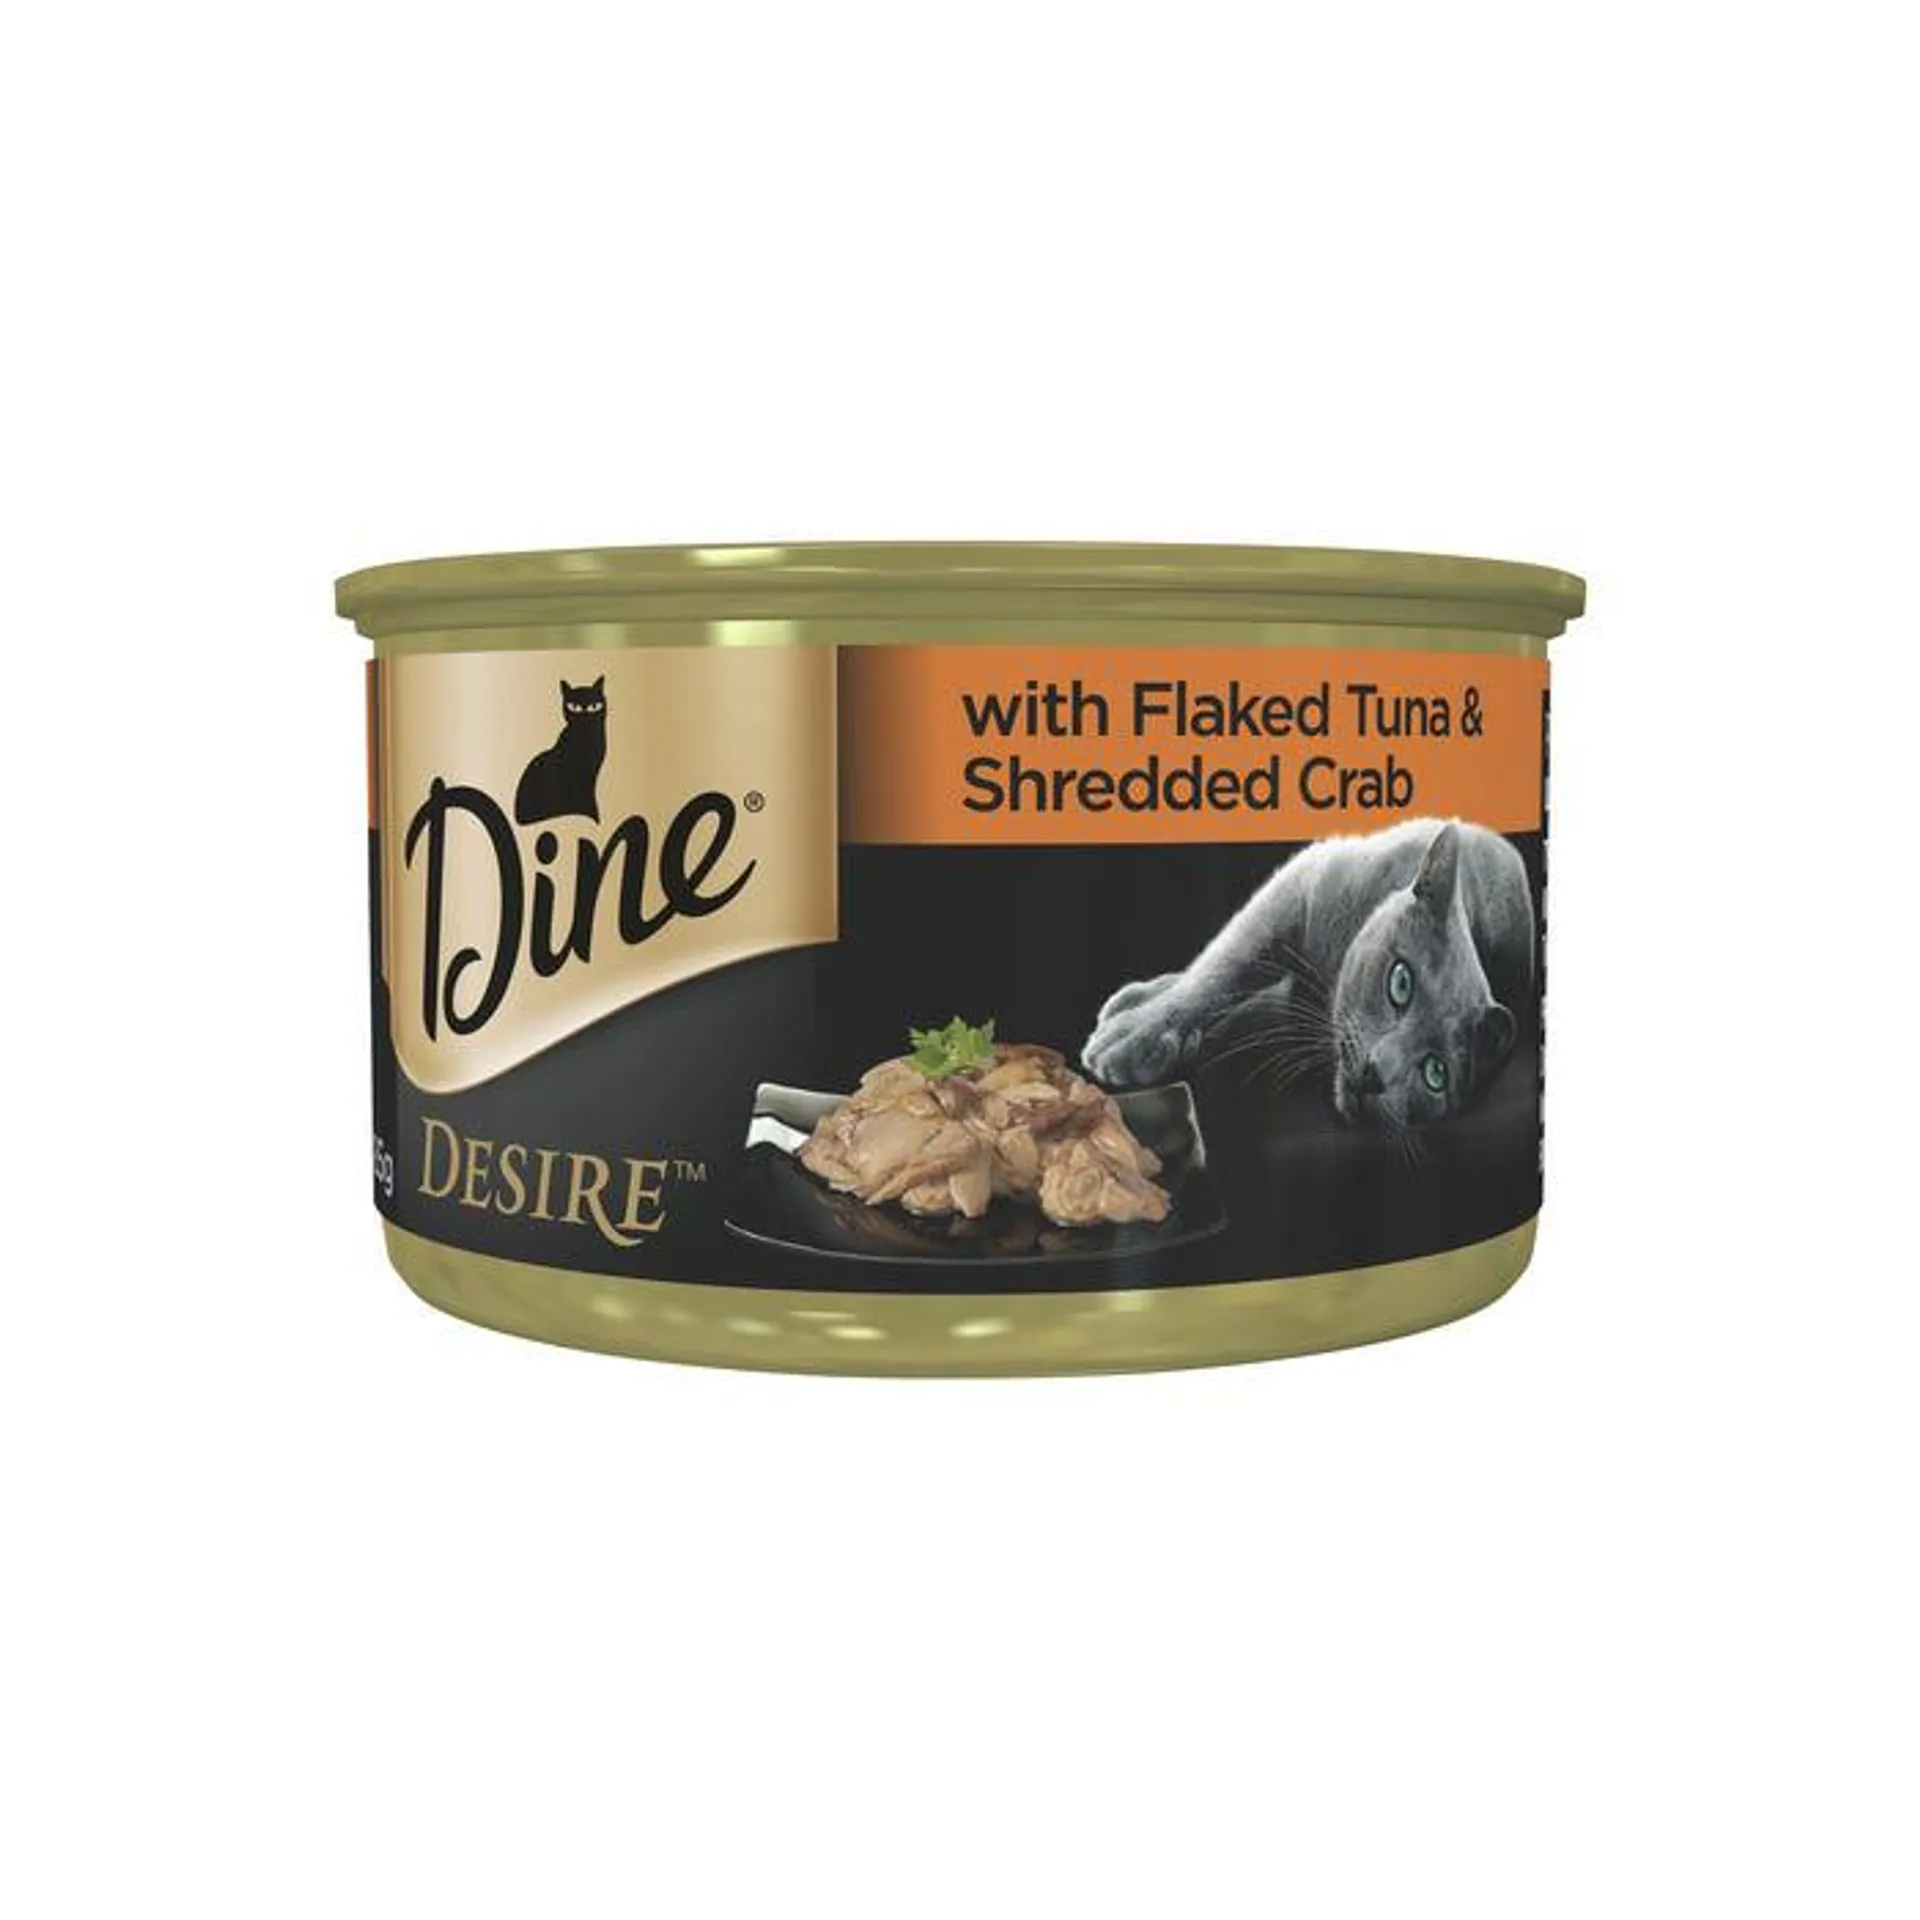 Dine Desire Flaked Tuna & Shredded Crab Cat Food 85g